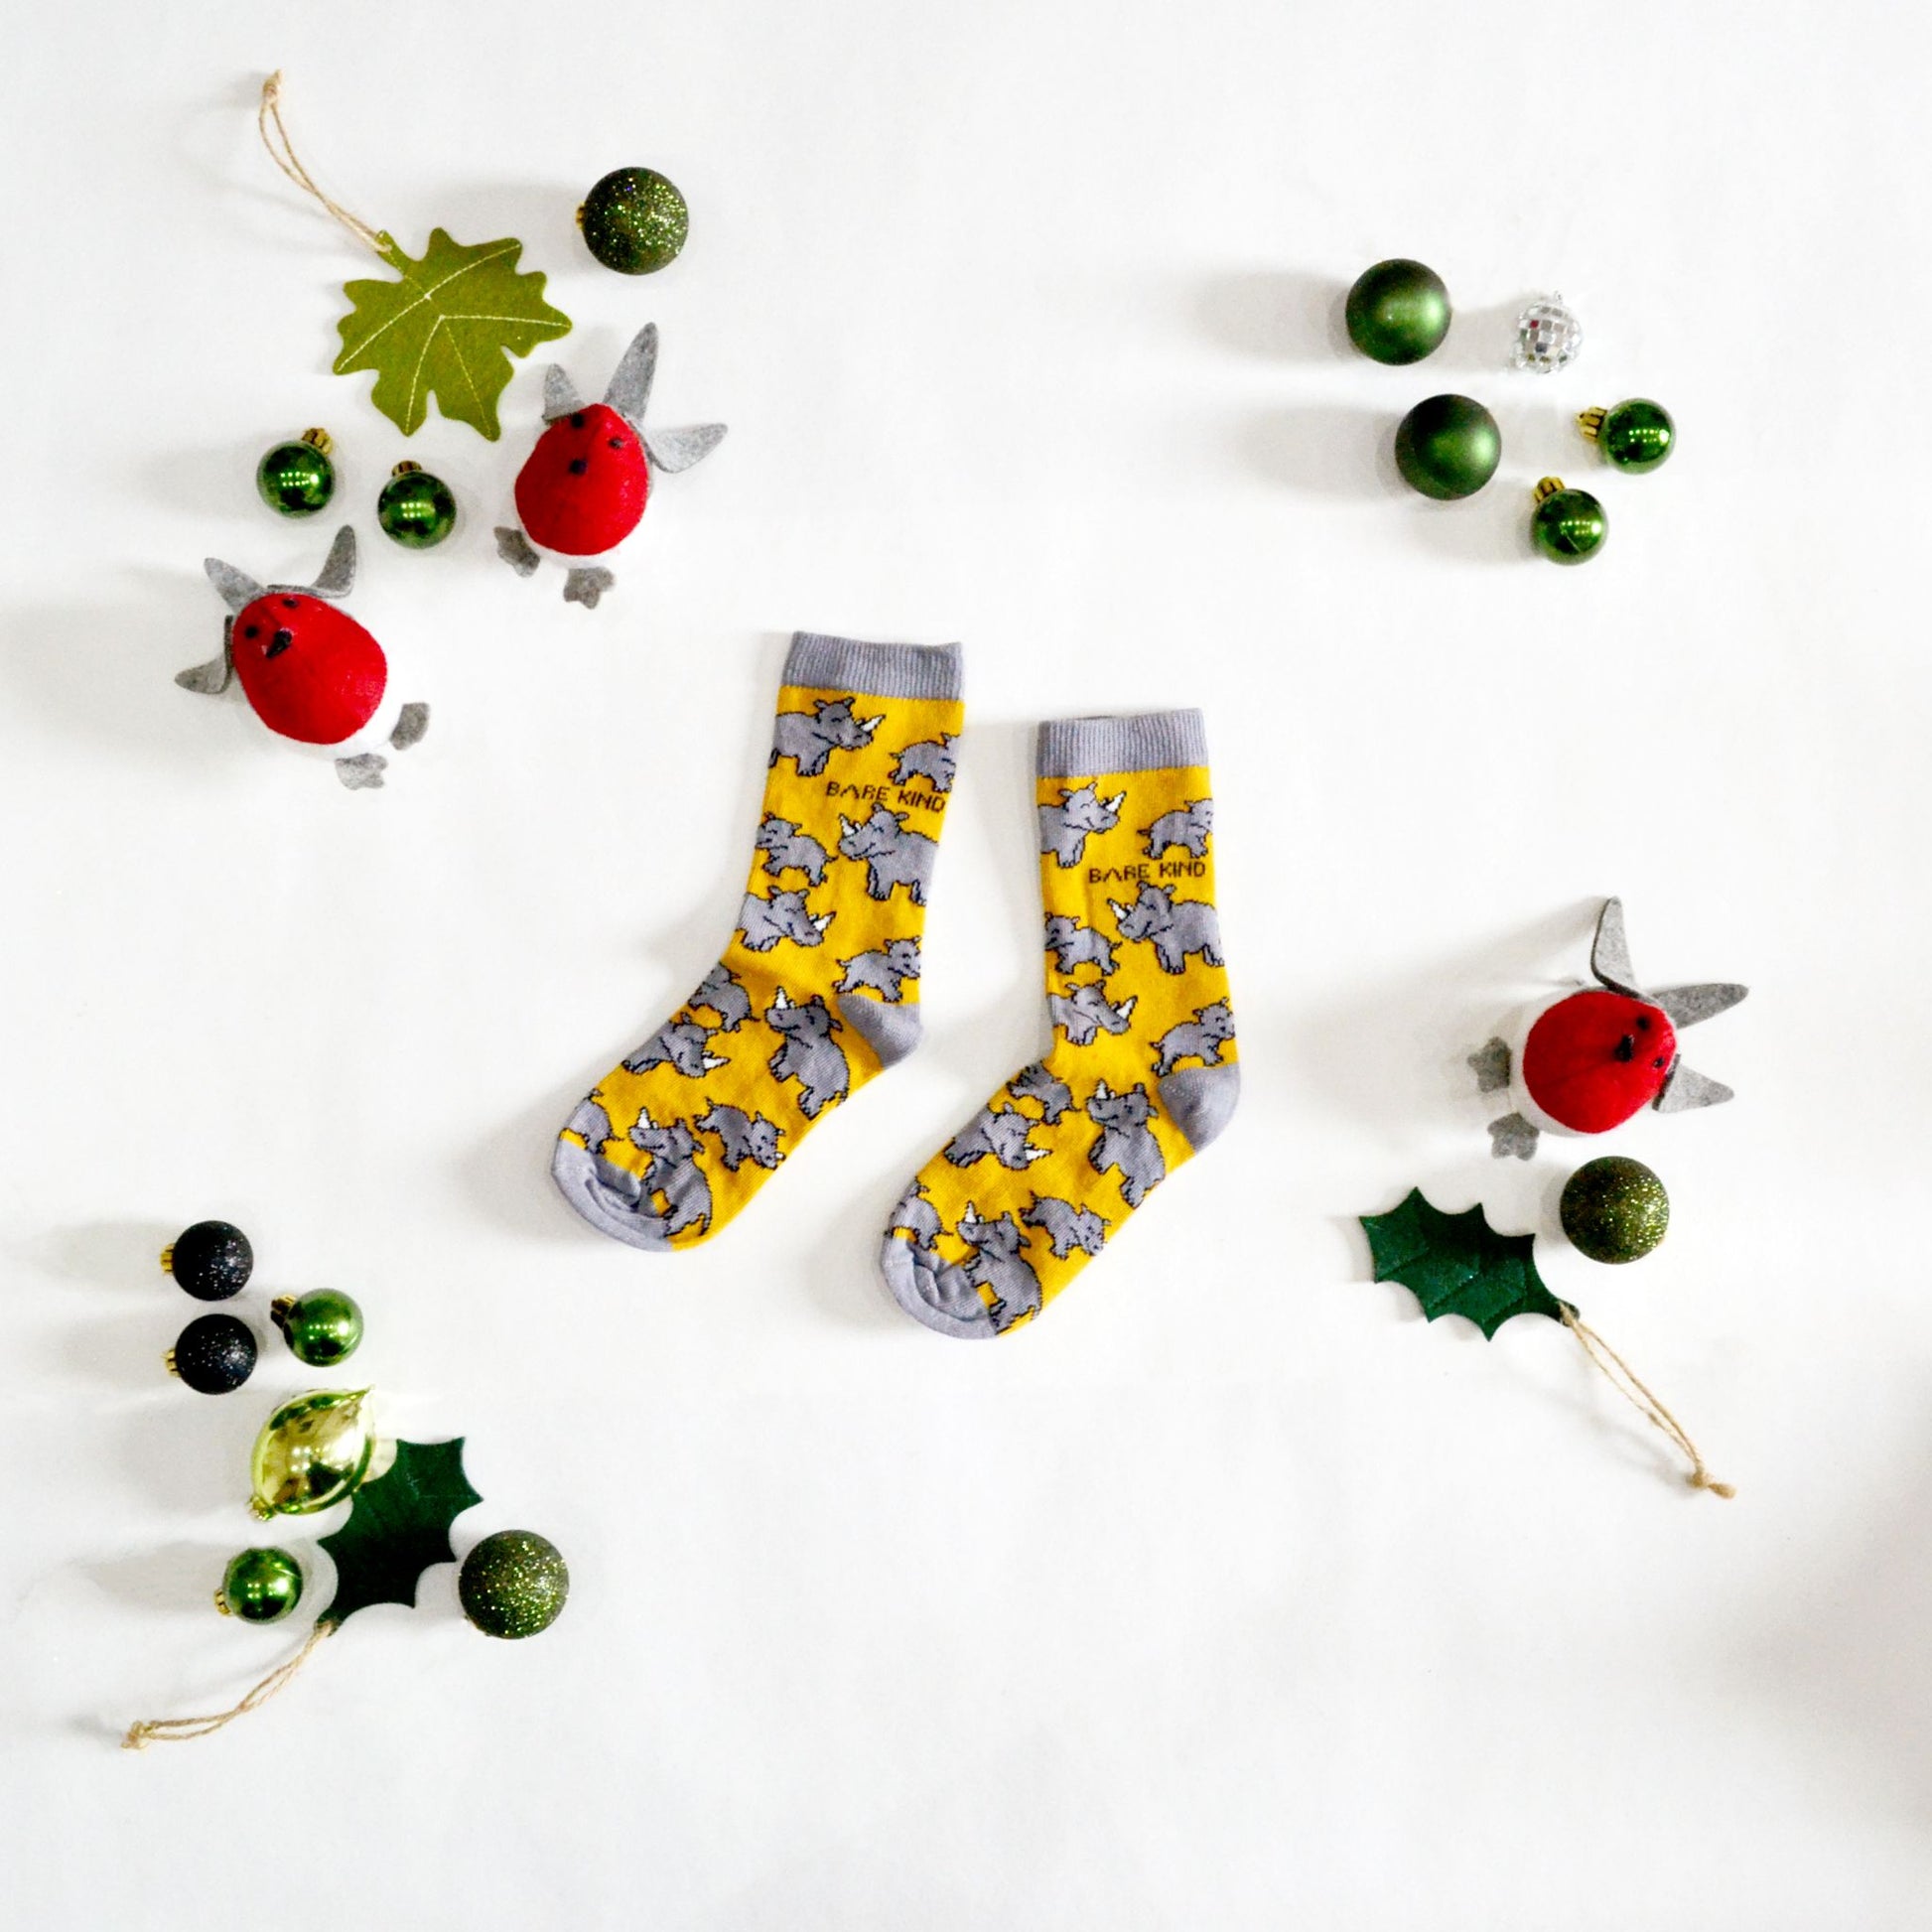 Socks Protecting Rhinos  Bamboo Socks in 3 Kids' Sizes - Christmas gift socks